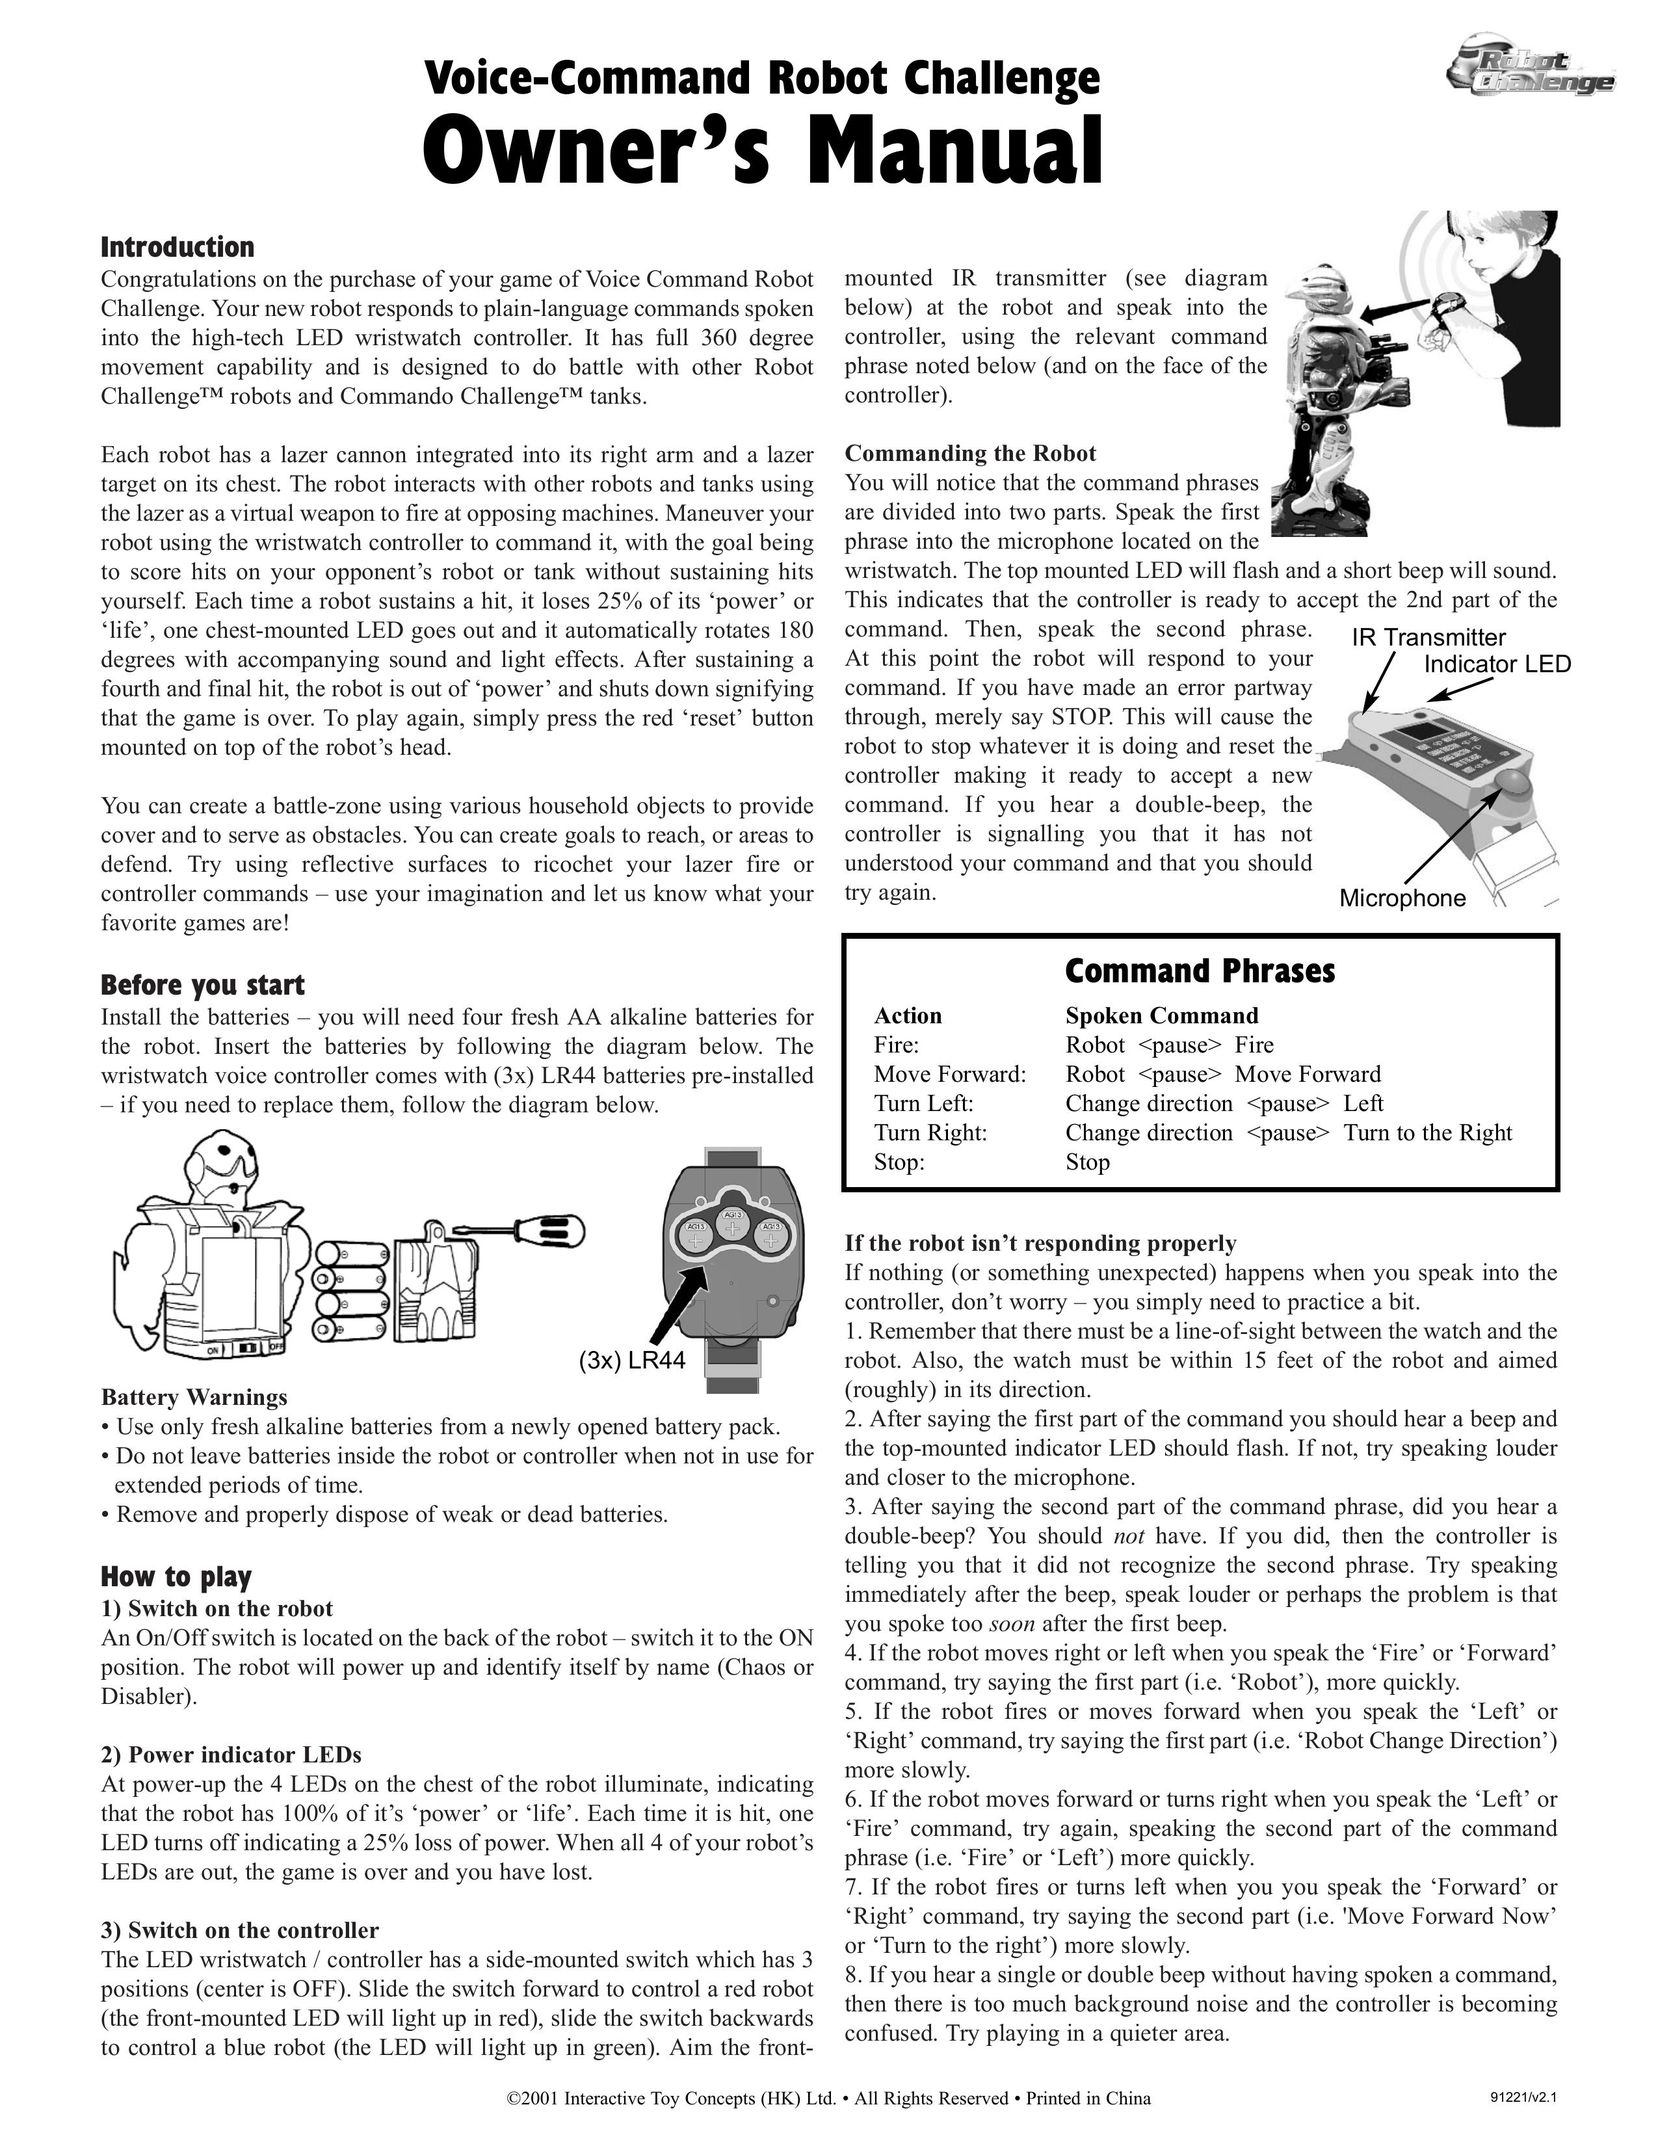 Interact-TV Voice Command Robot Challenge Robotics User Manual